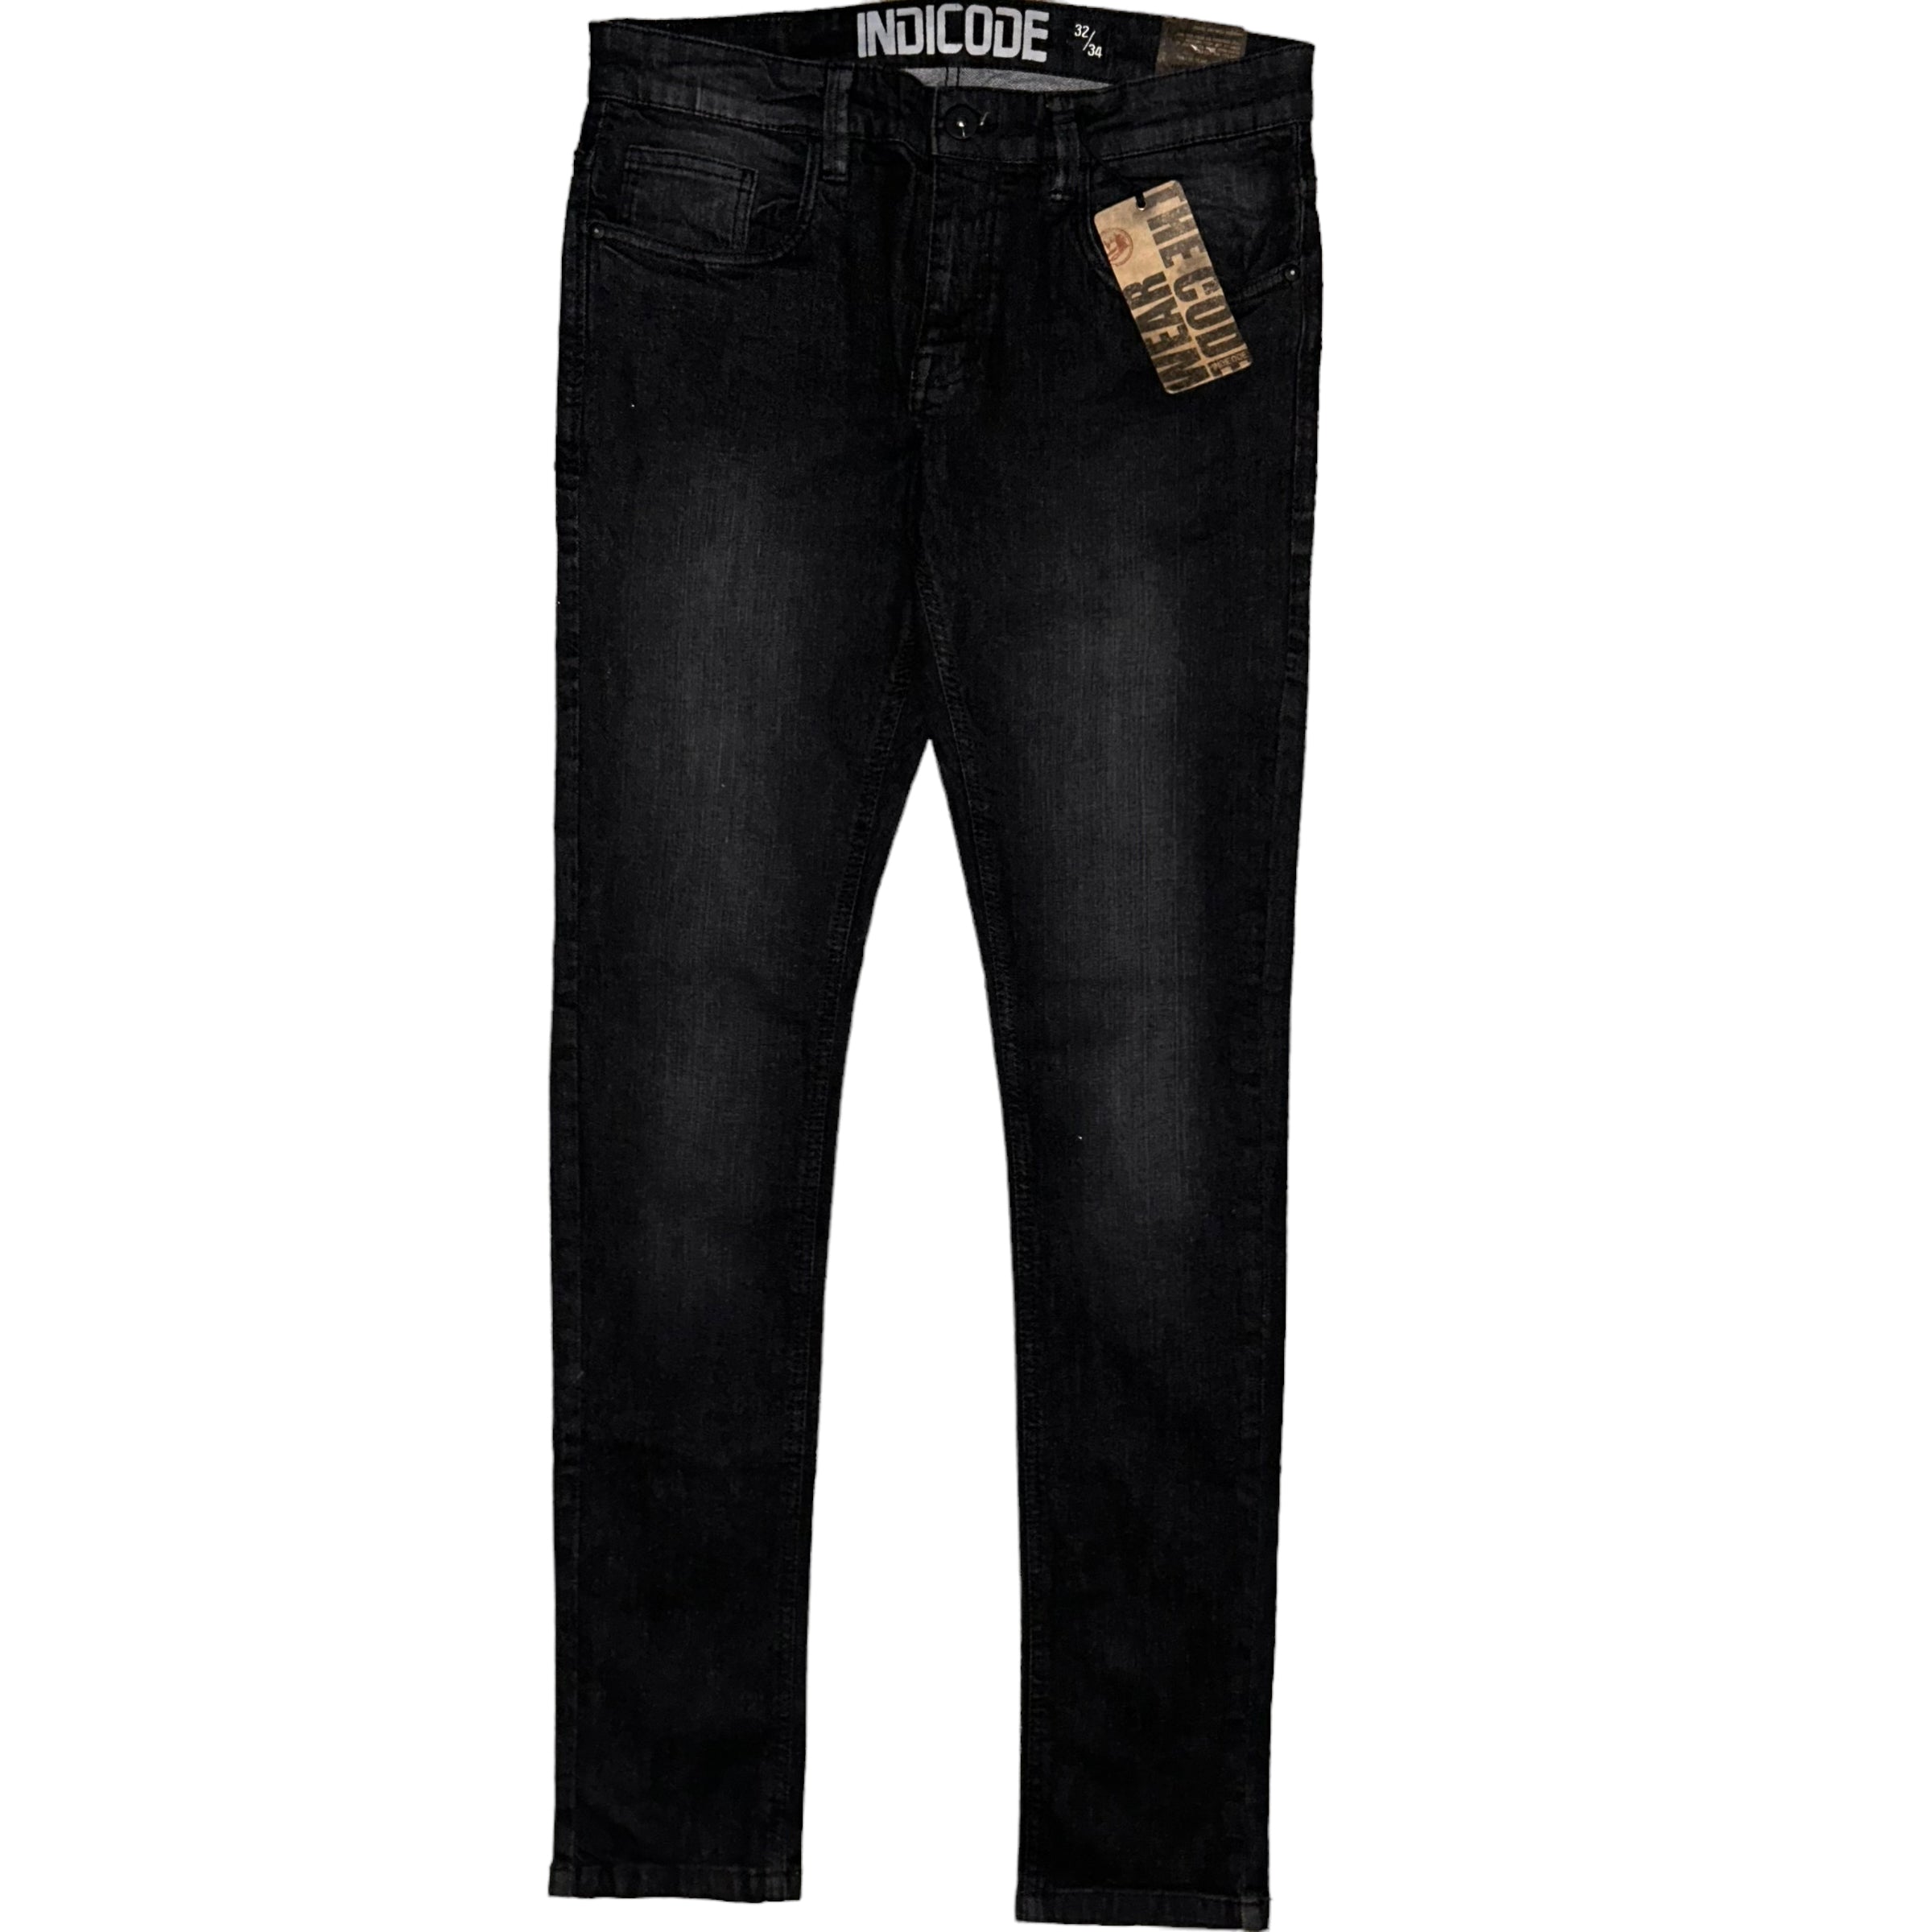 Jeans Indicode (M 32 USA)